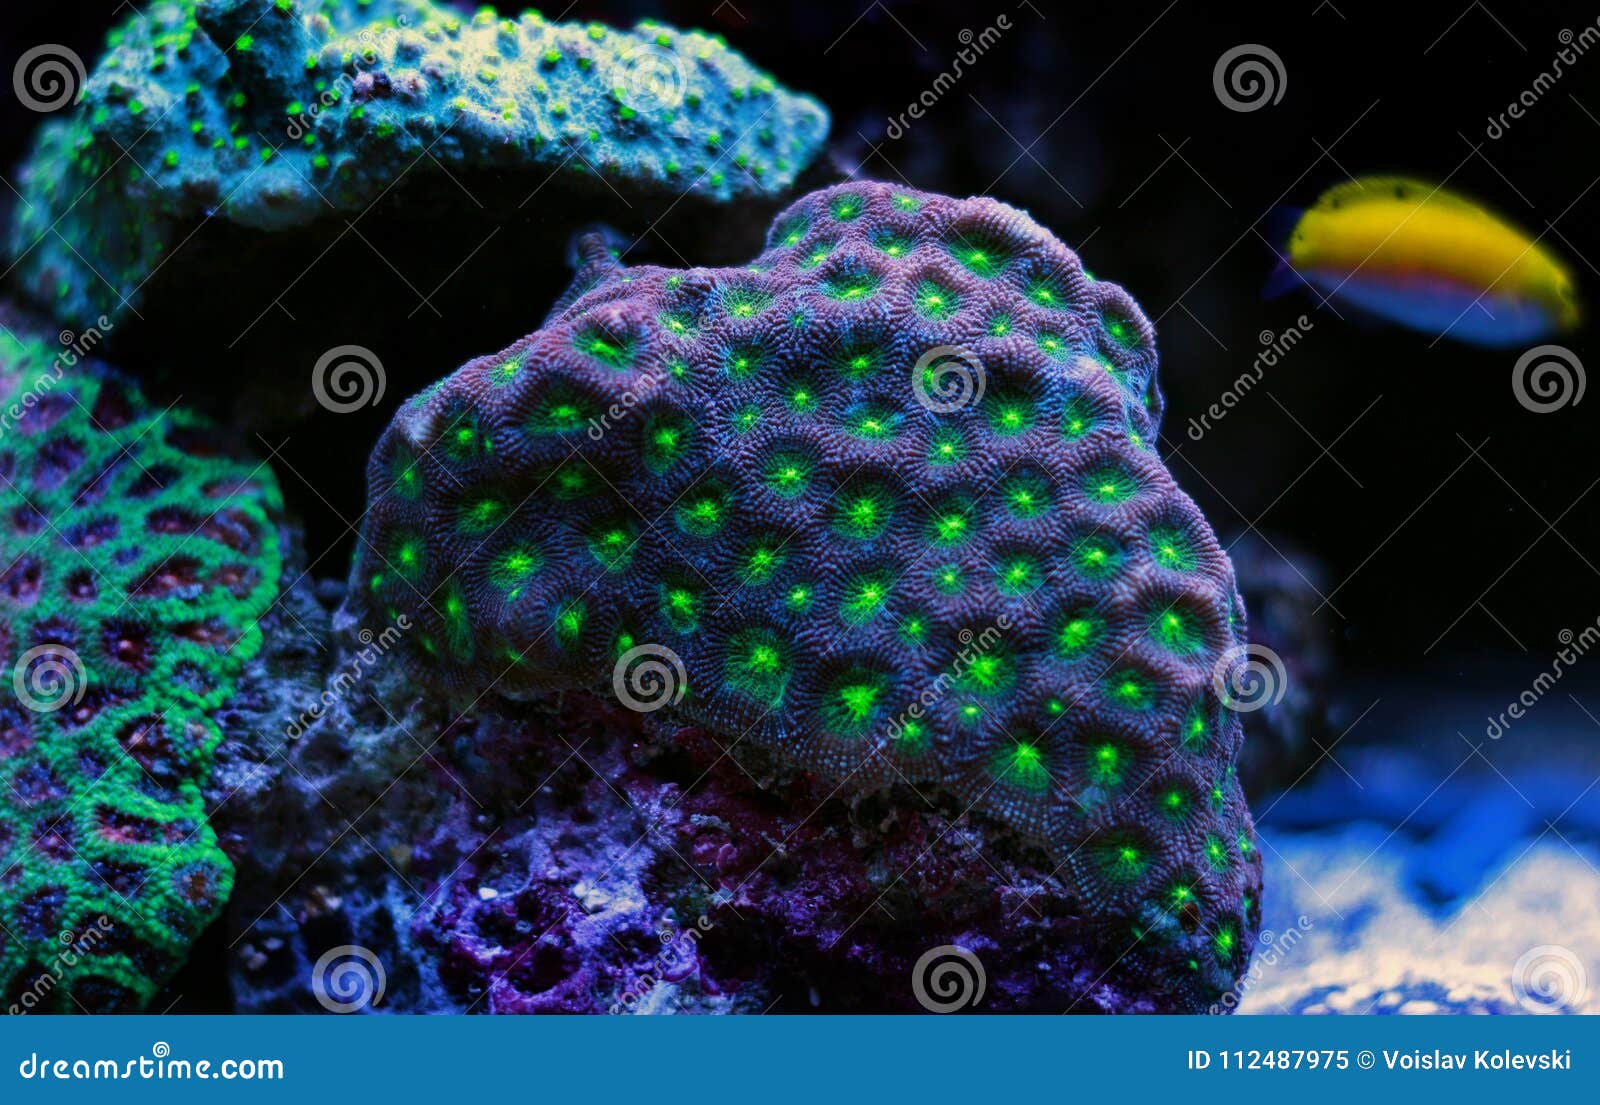 Brain LPS Coral, Favites in Saltwater Reef Aquarium Tank Stock Image ...